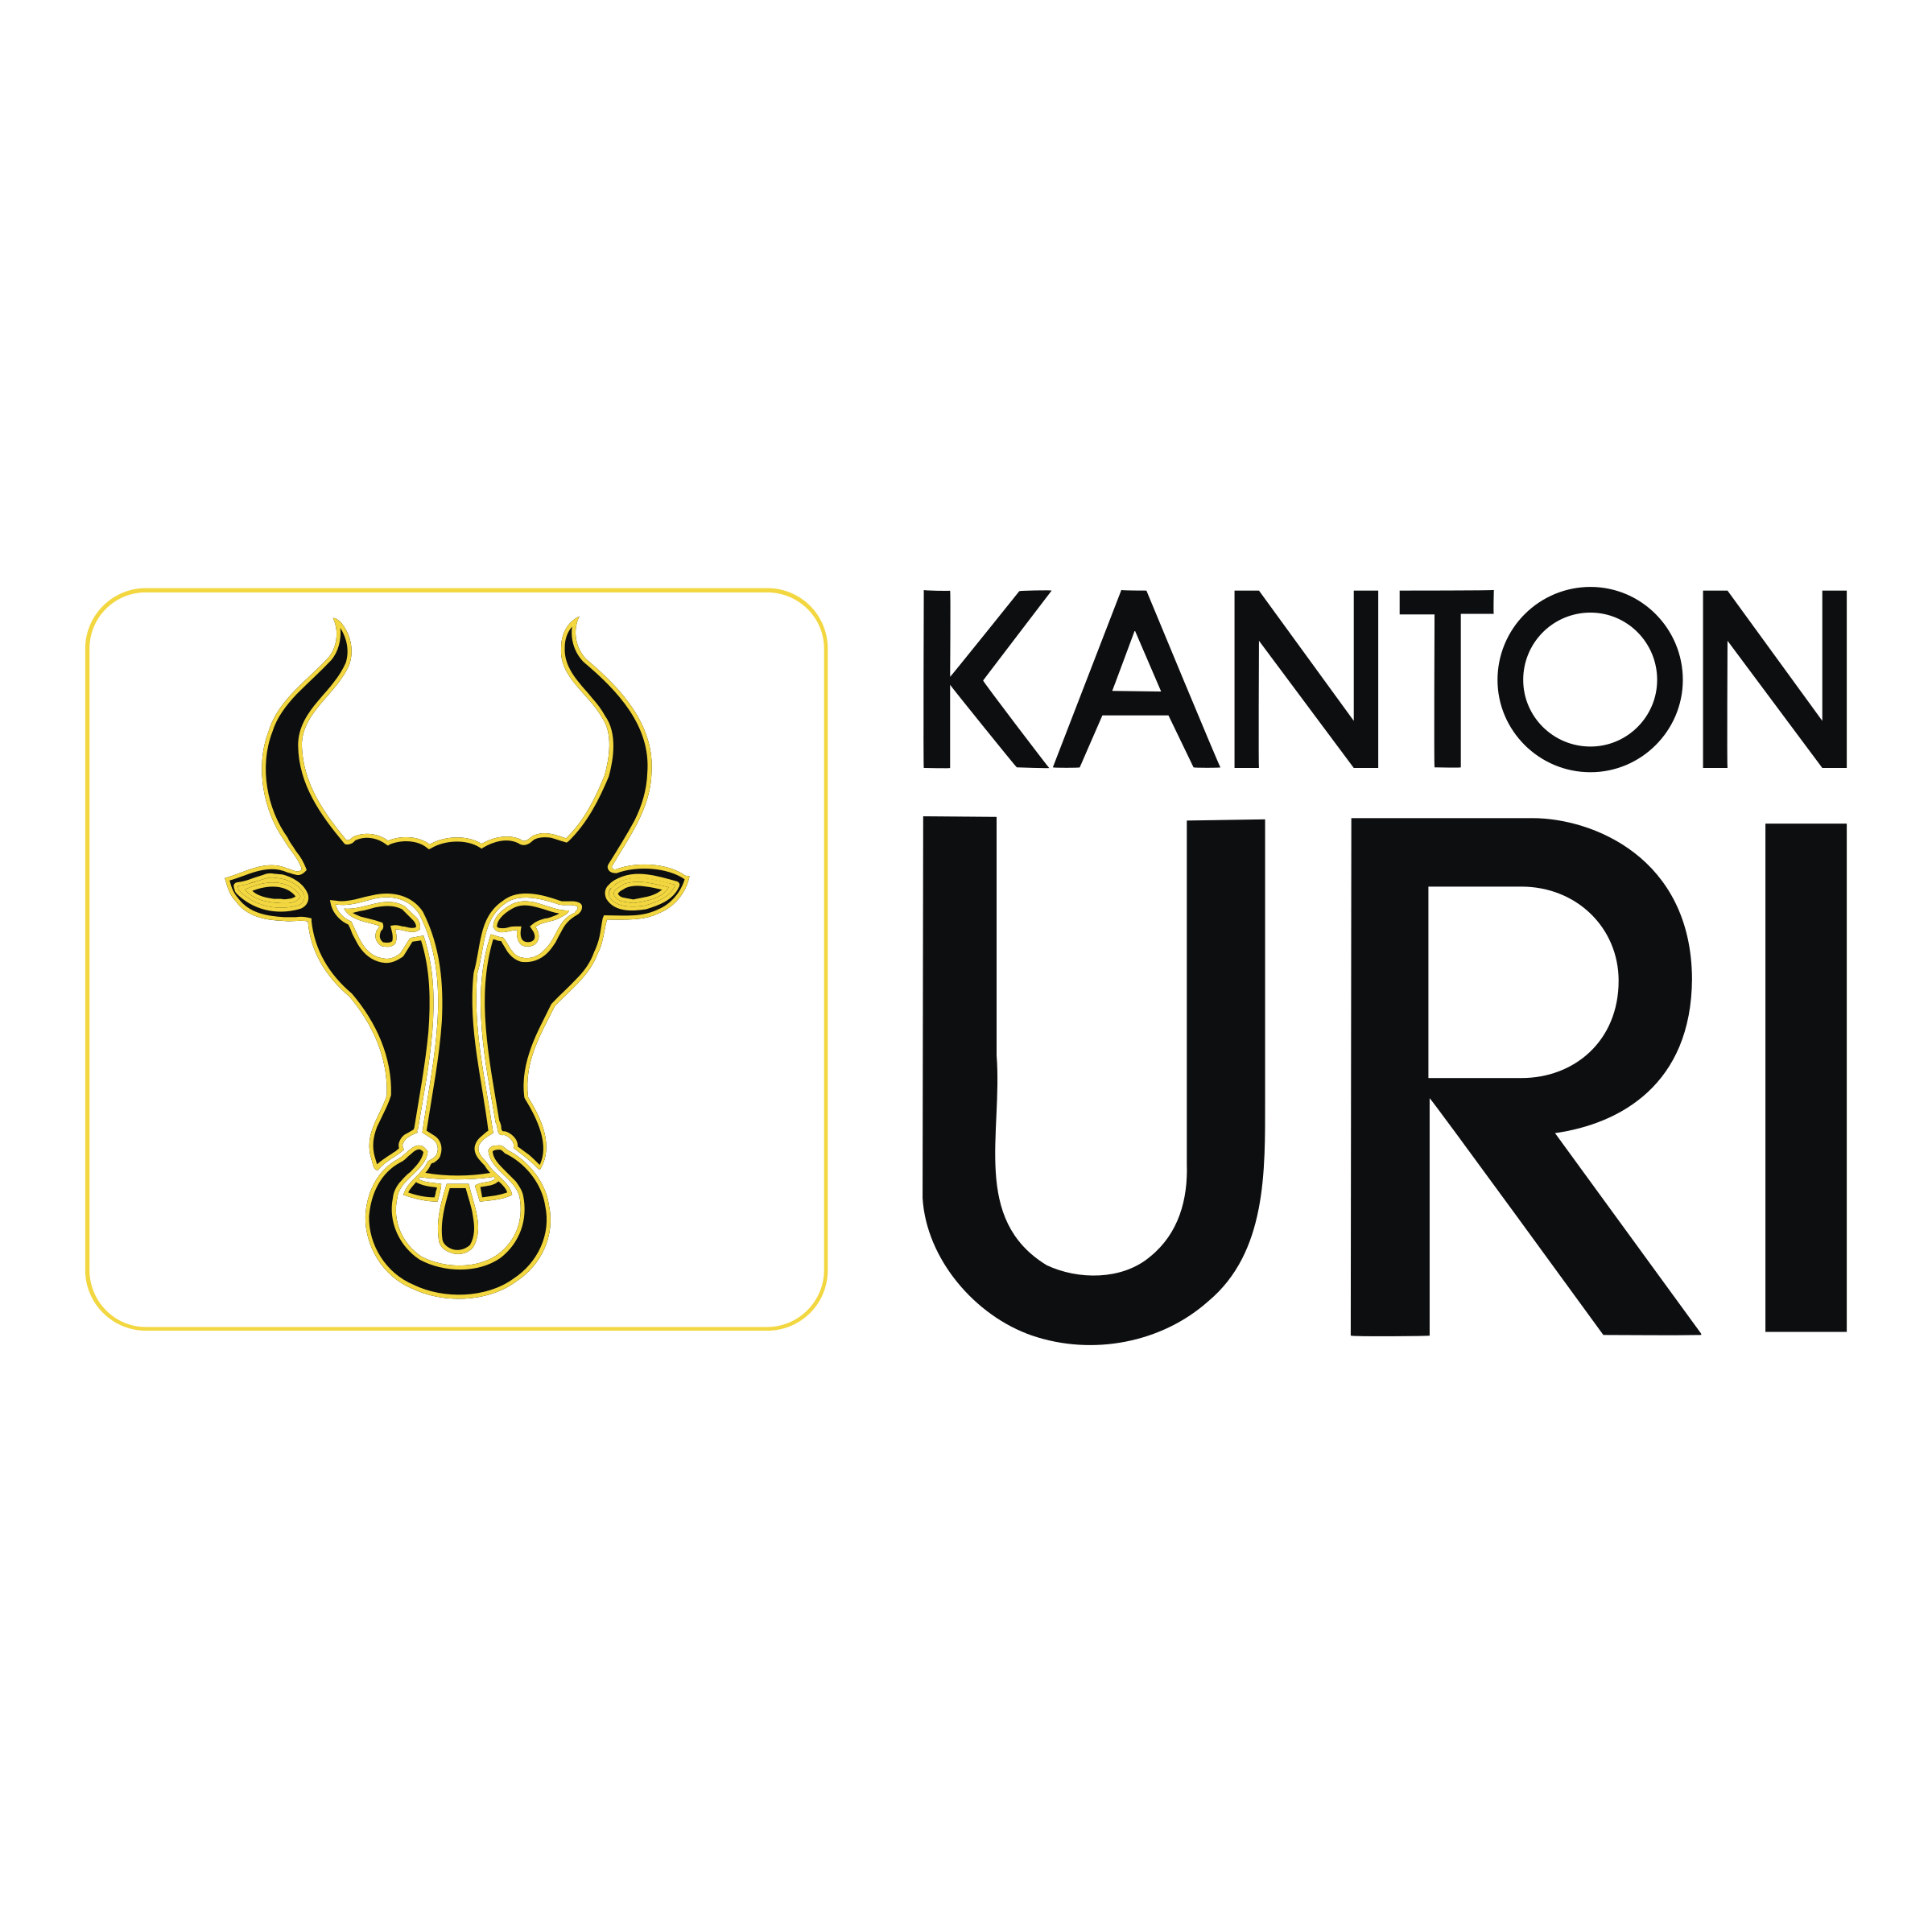 Uri Logo - Kanton Uri Logo PNG Transparent & SVG Vector - Freebie Supply